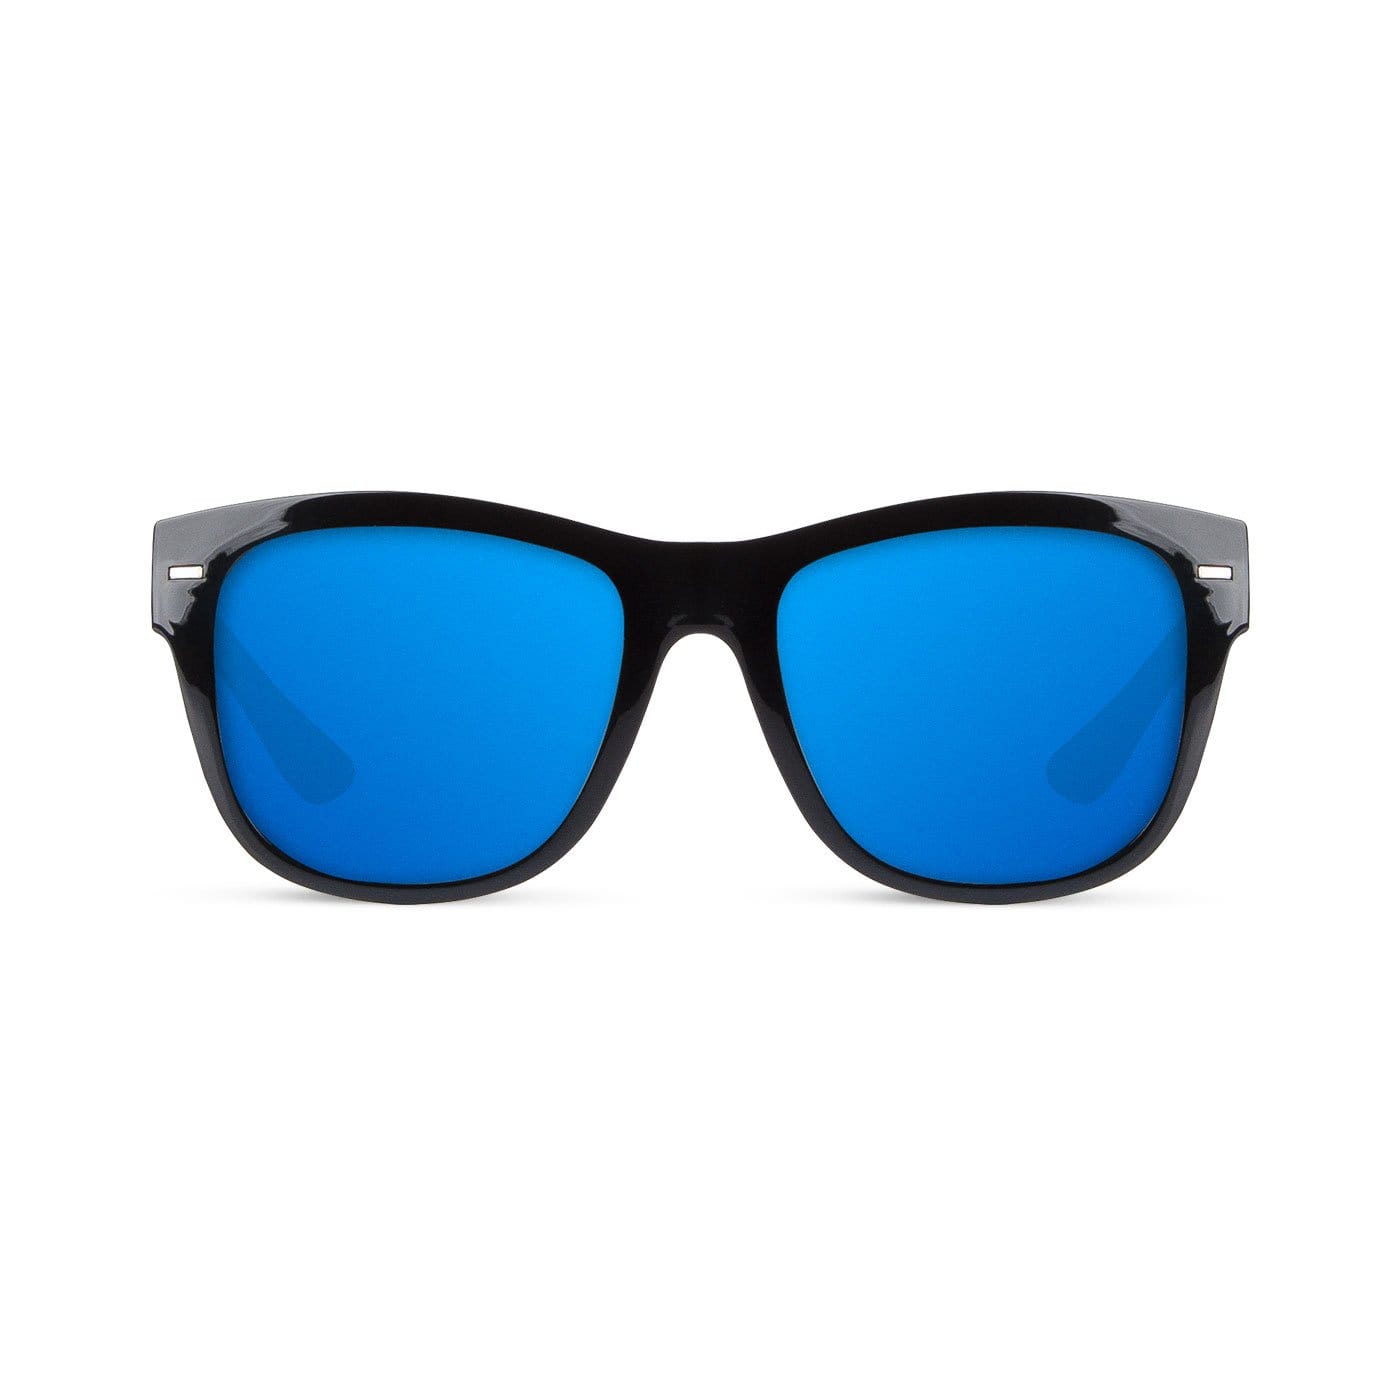 Makai Shinny Black / Blue Sunglasses